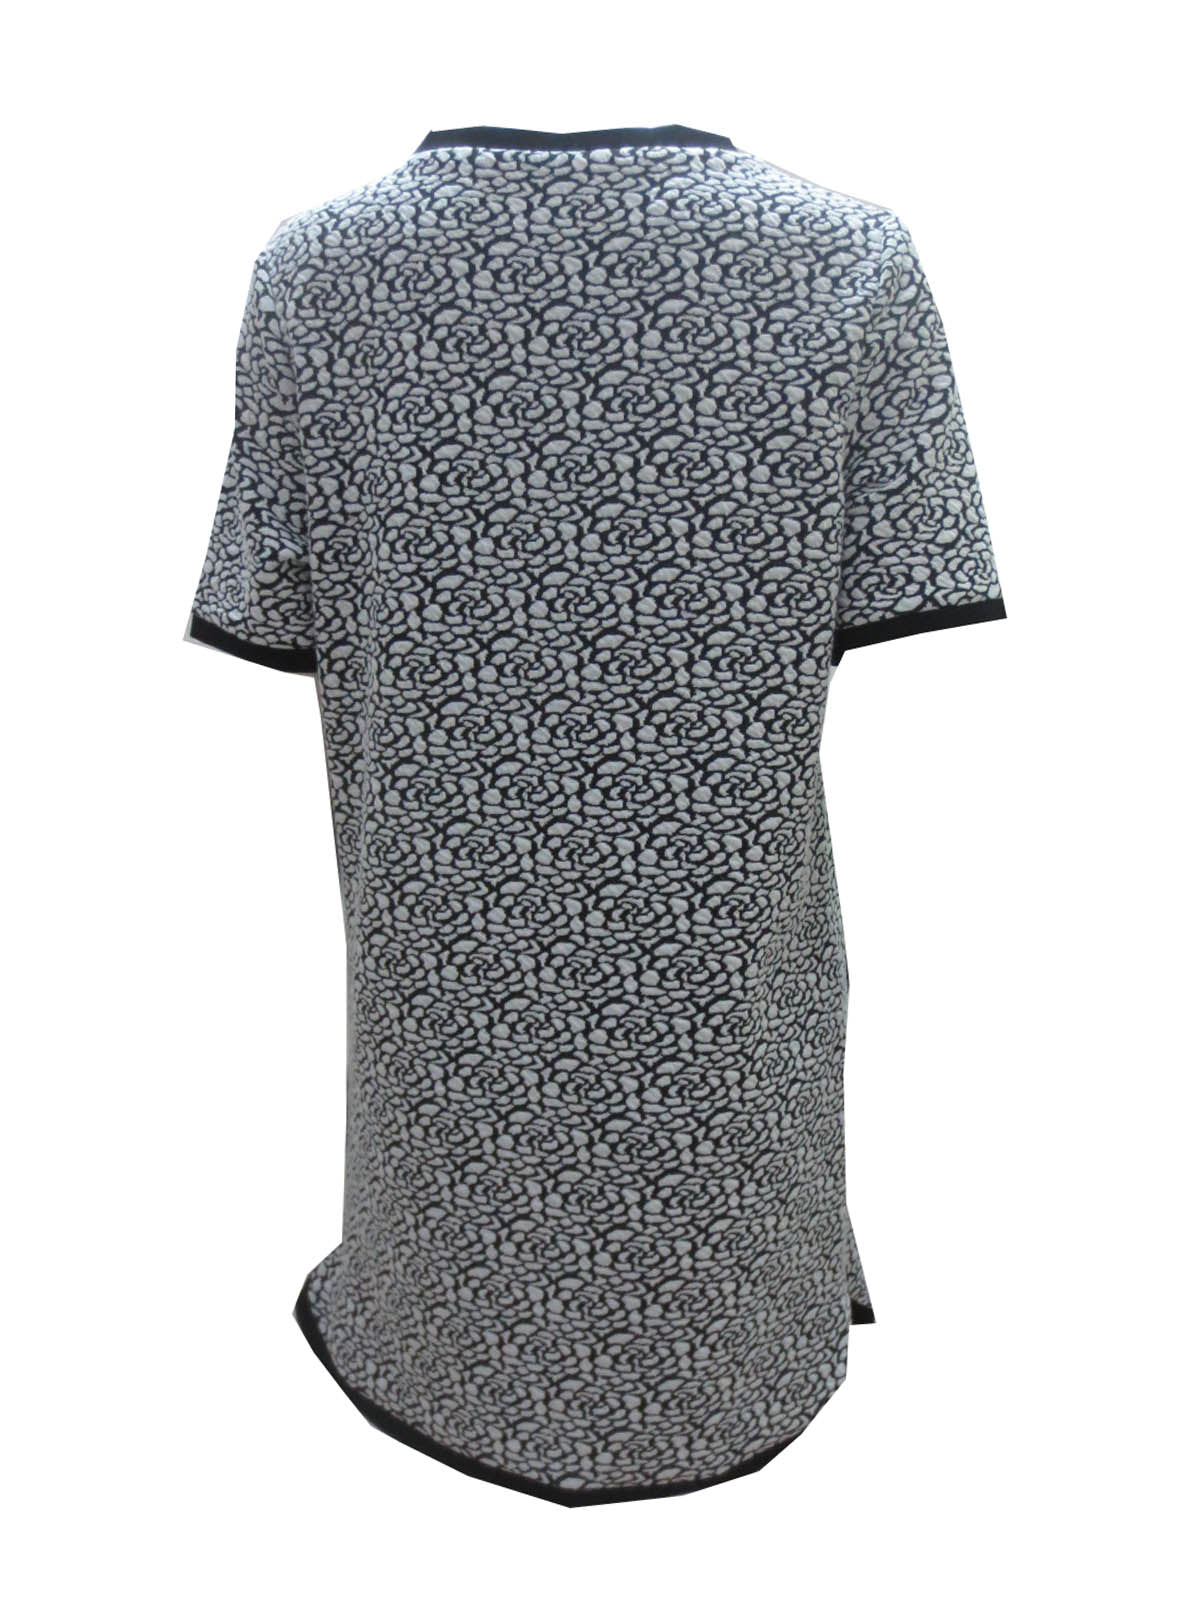 MC0038SS Knit shift dress on sales $10